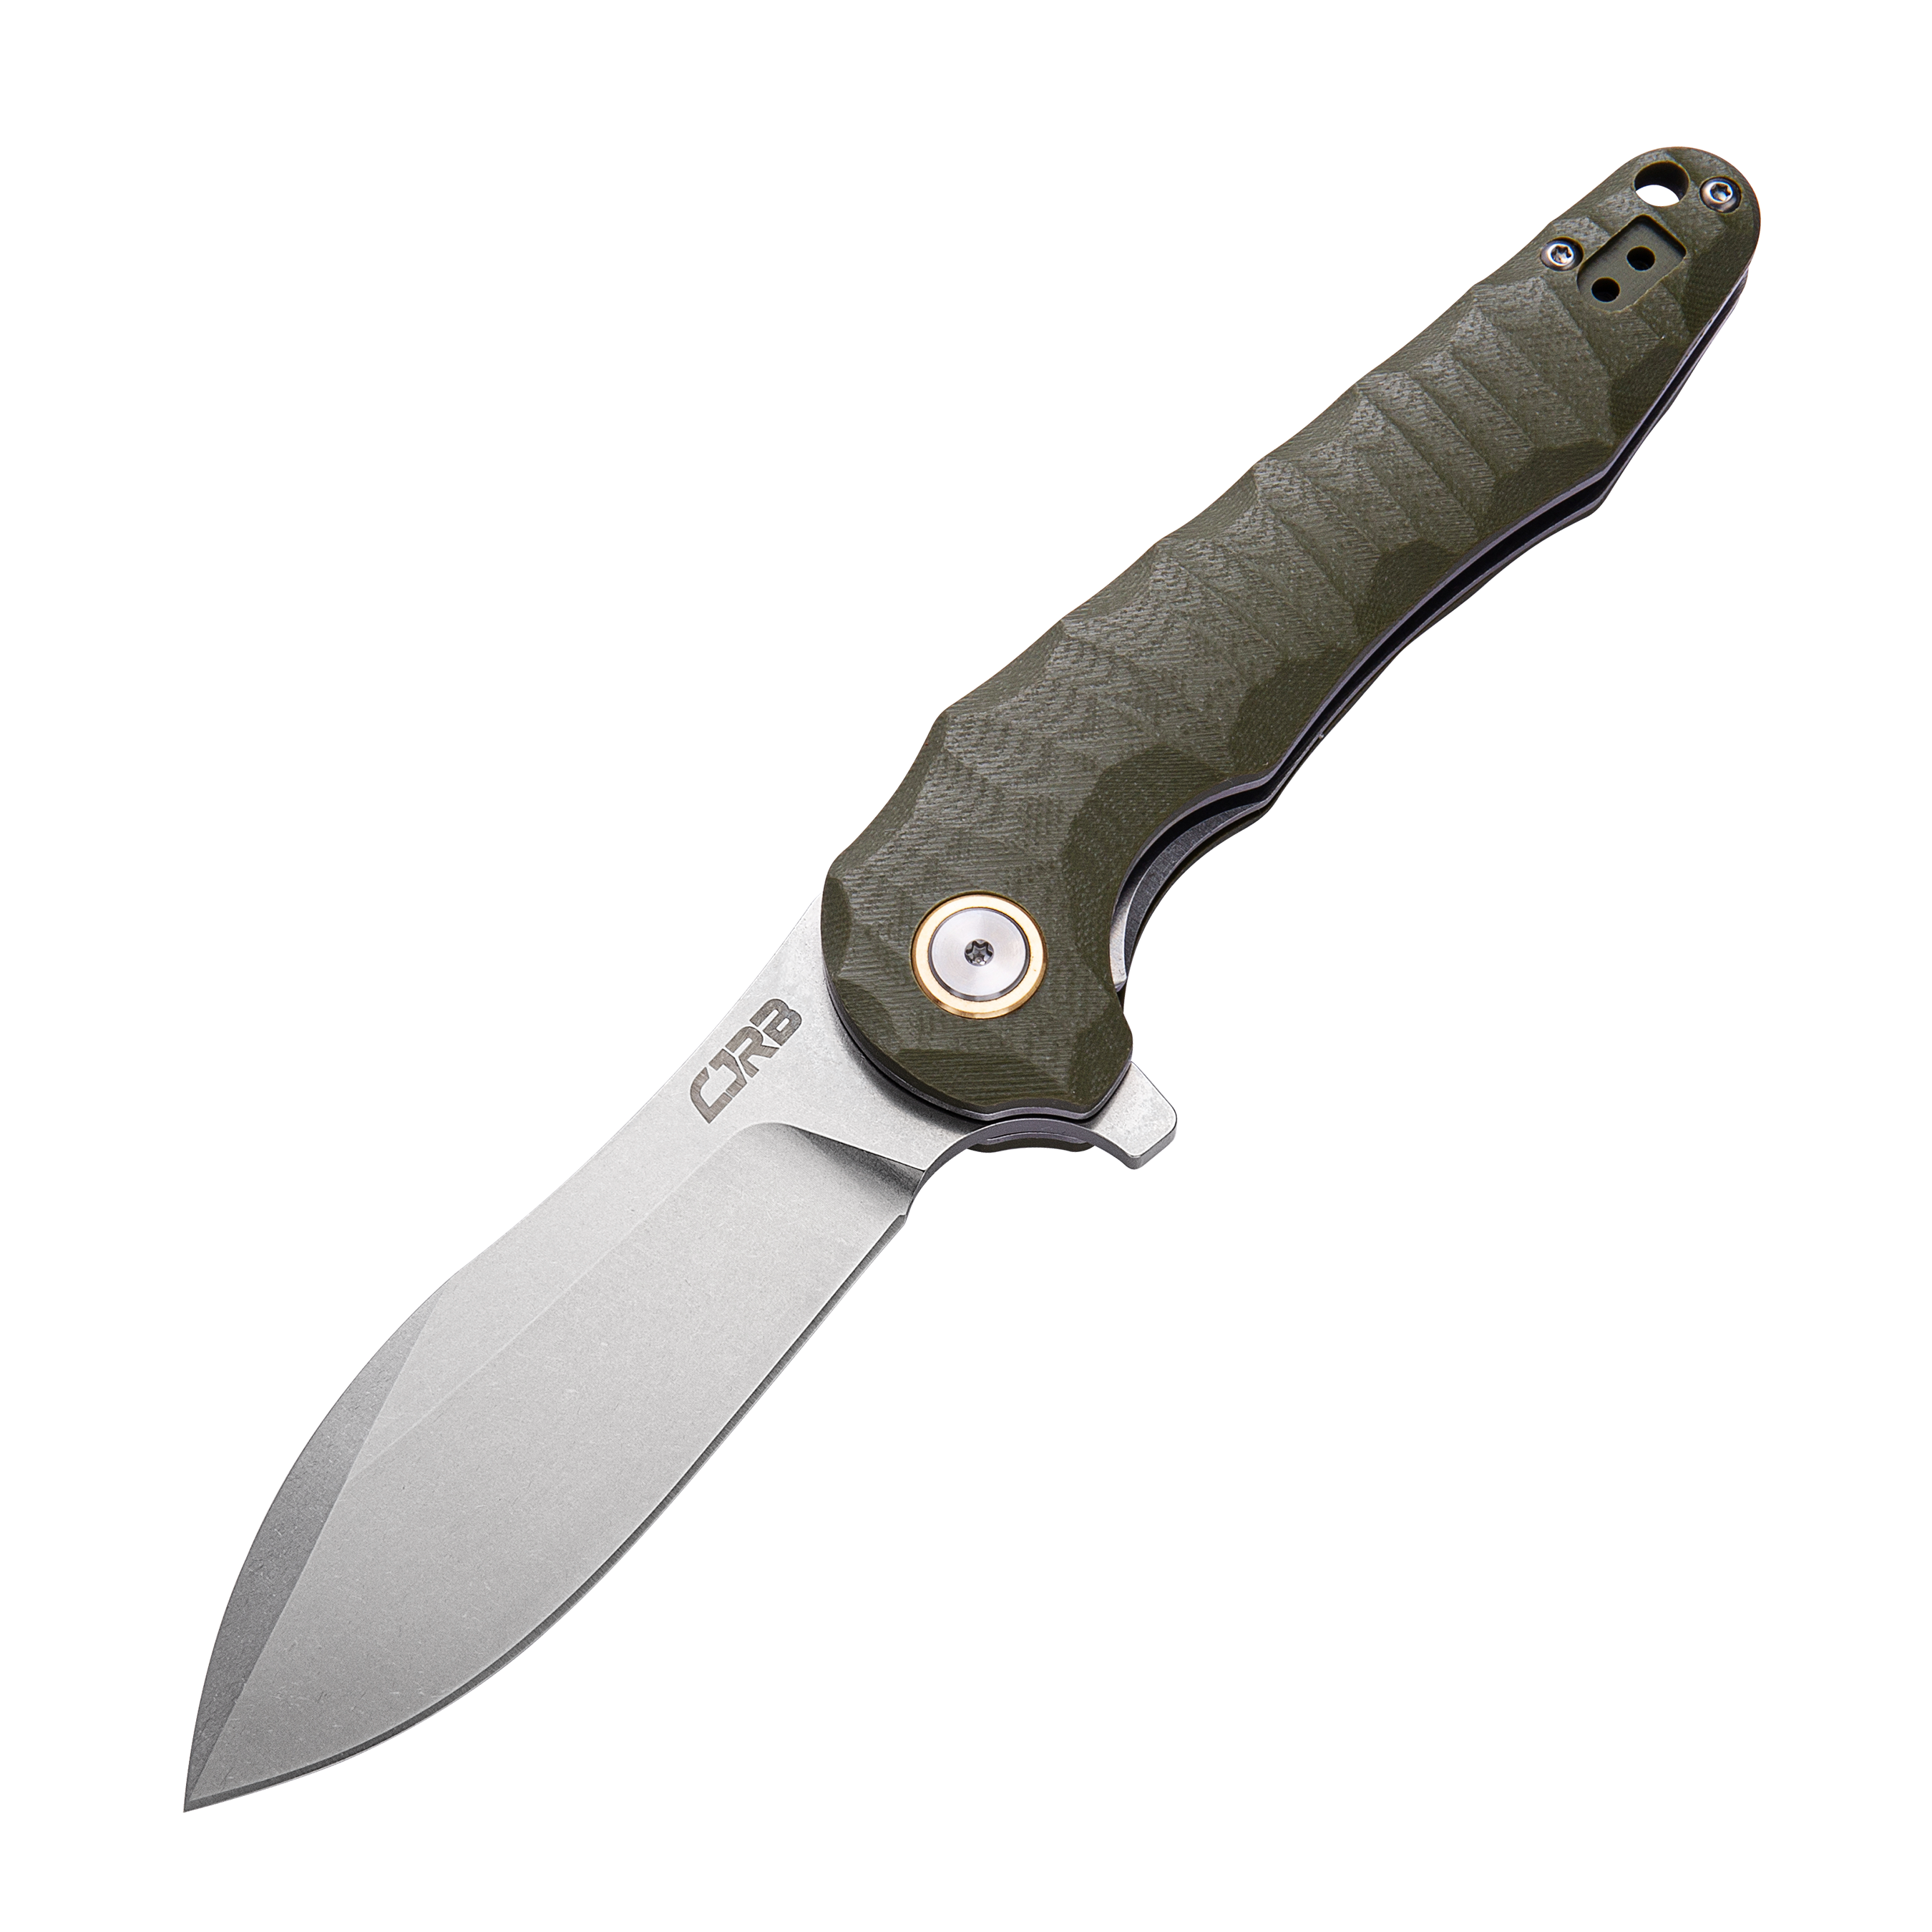 CJRB Mangrove J1910 D2/AR-RPM9 Blade G10(Contoured & CNC Pattern Texture) Handle Folding Knives